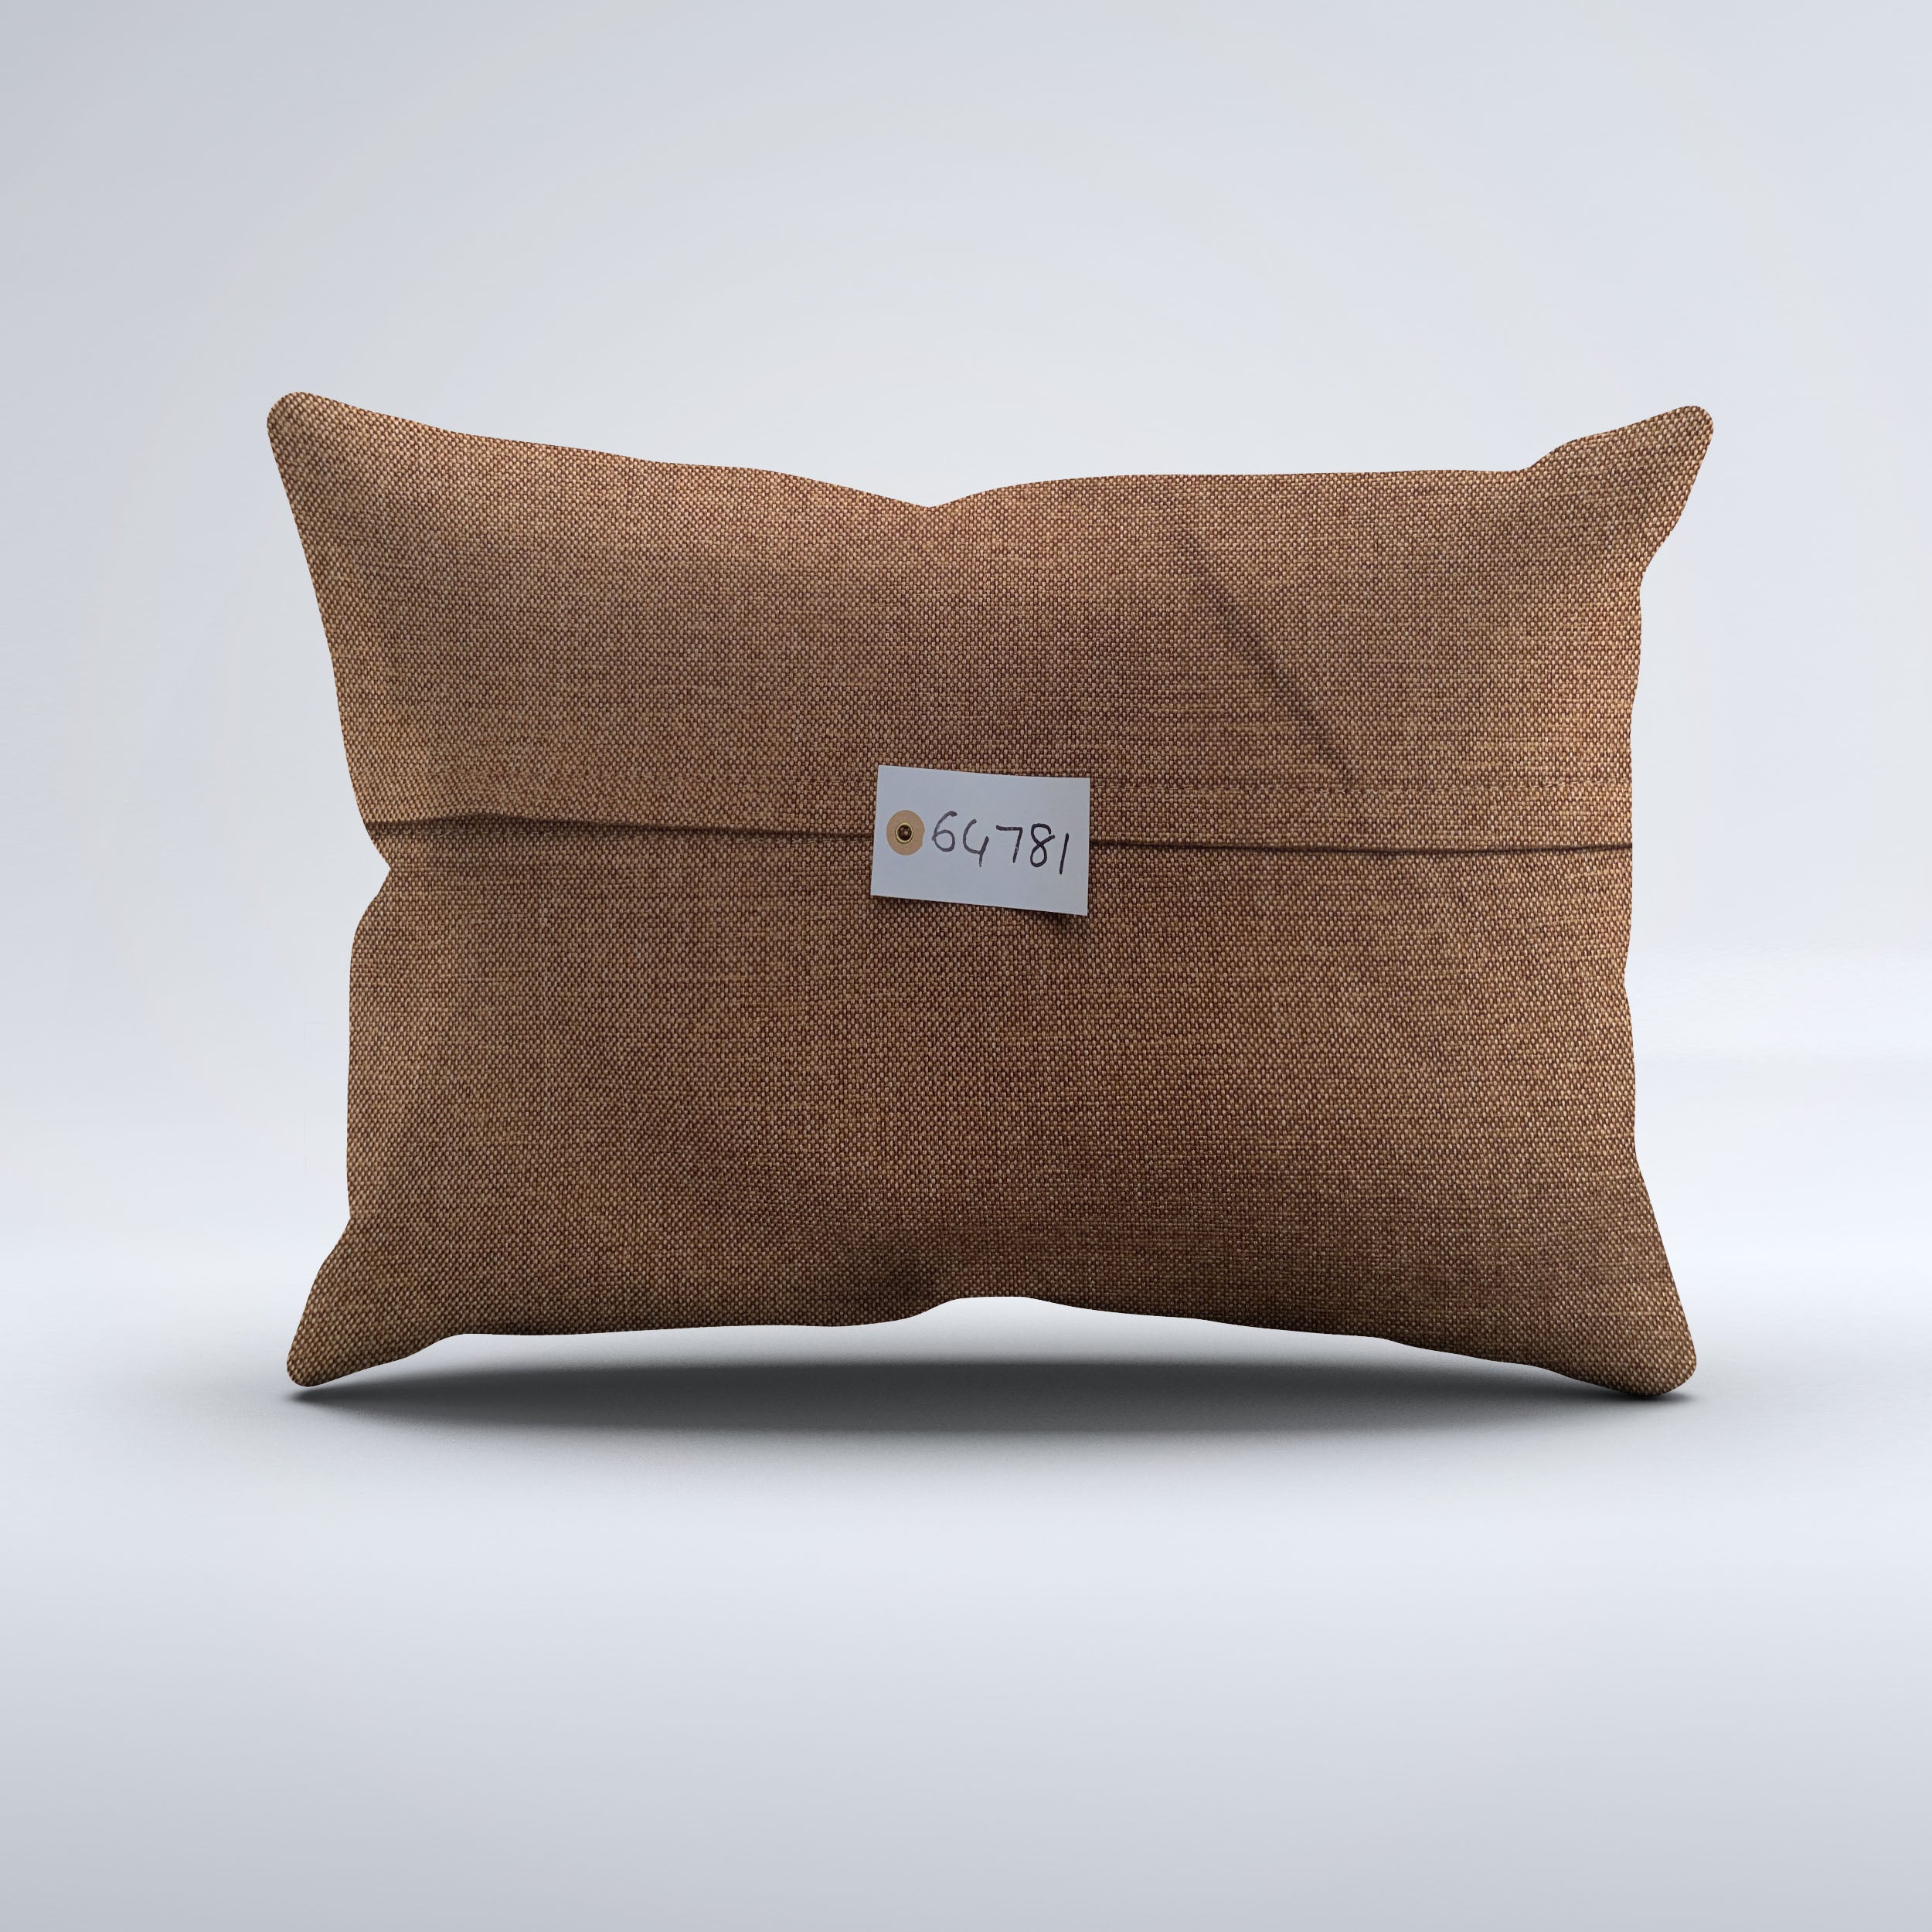 Vintage Turkish Kilim Cushion Cover 60x40 cm Square Wool Kelim Pillowcase 64781